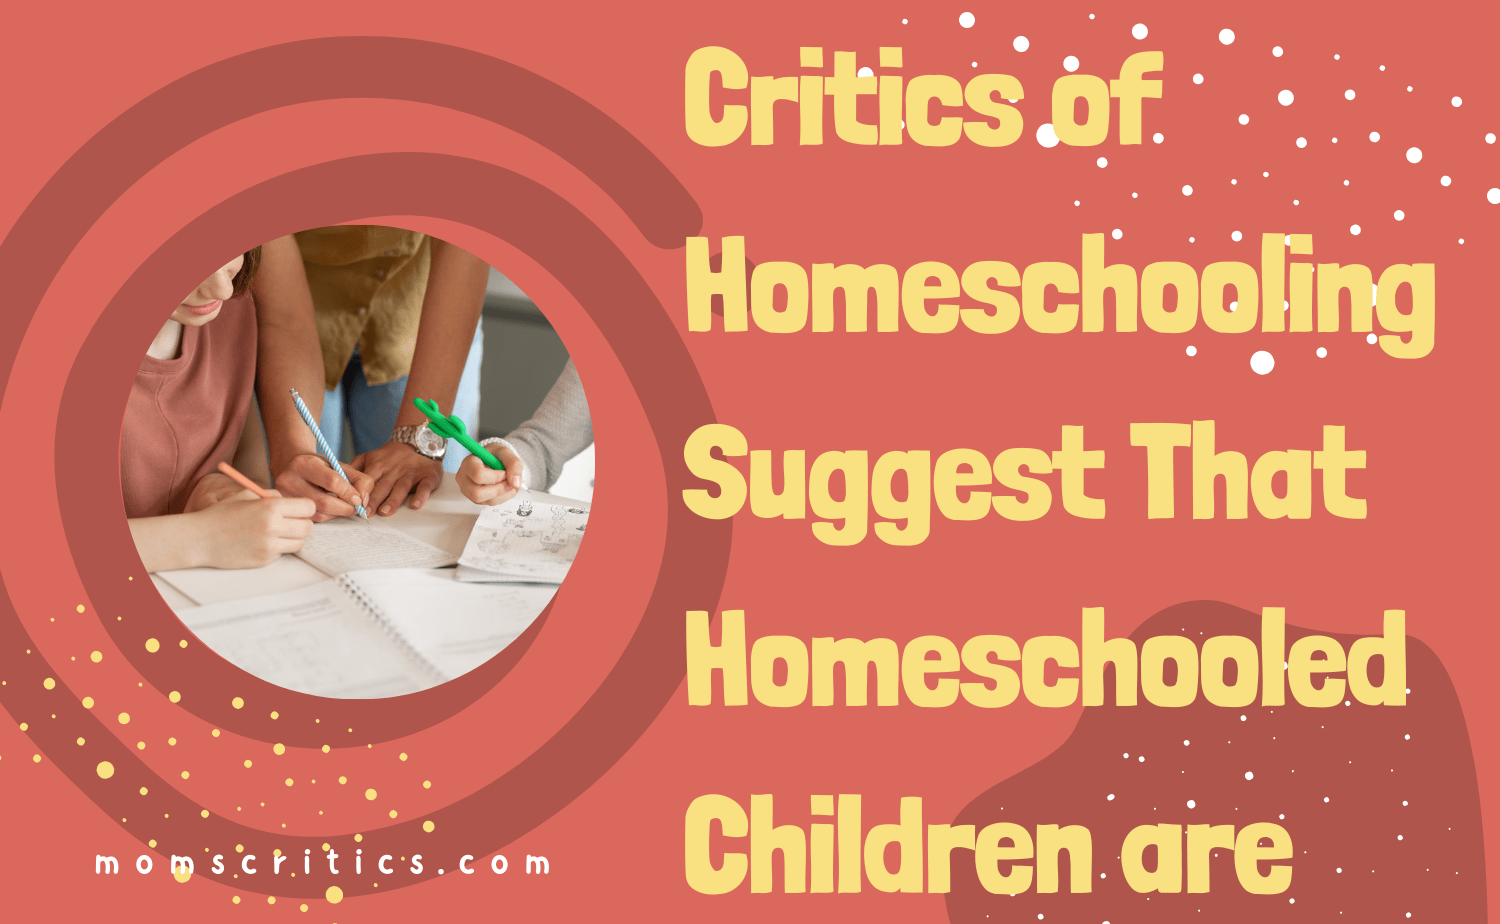 Critics of Homeschooling Suggest That Homeschooled Children are